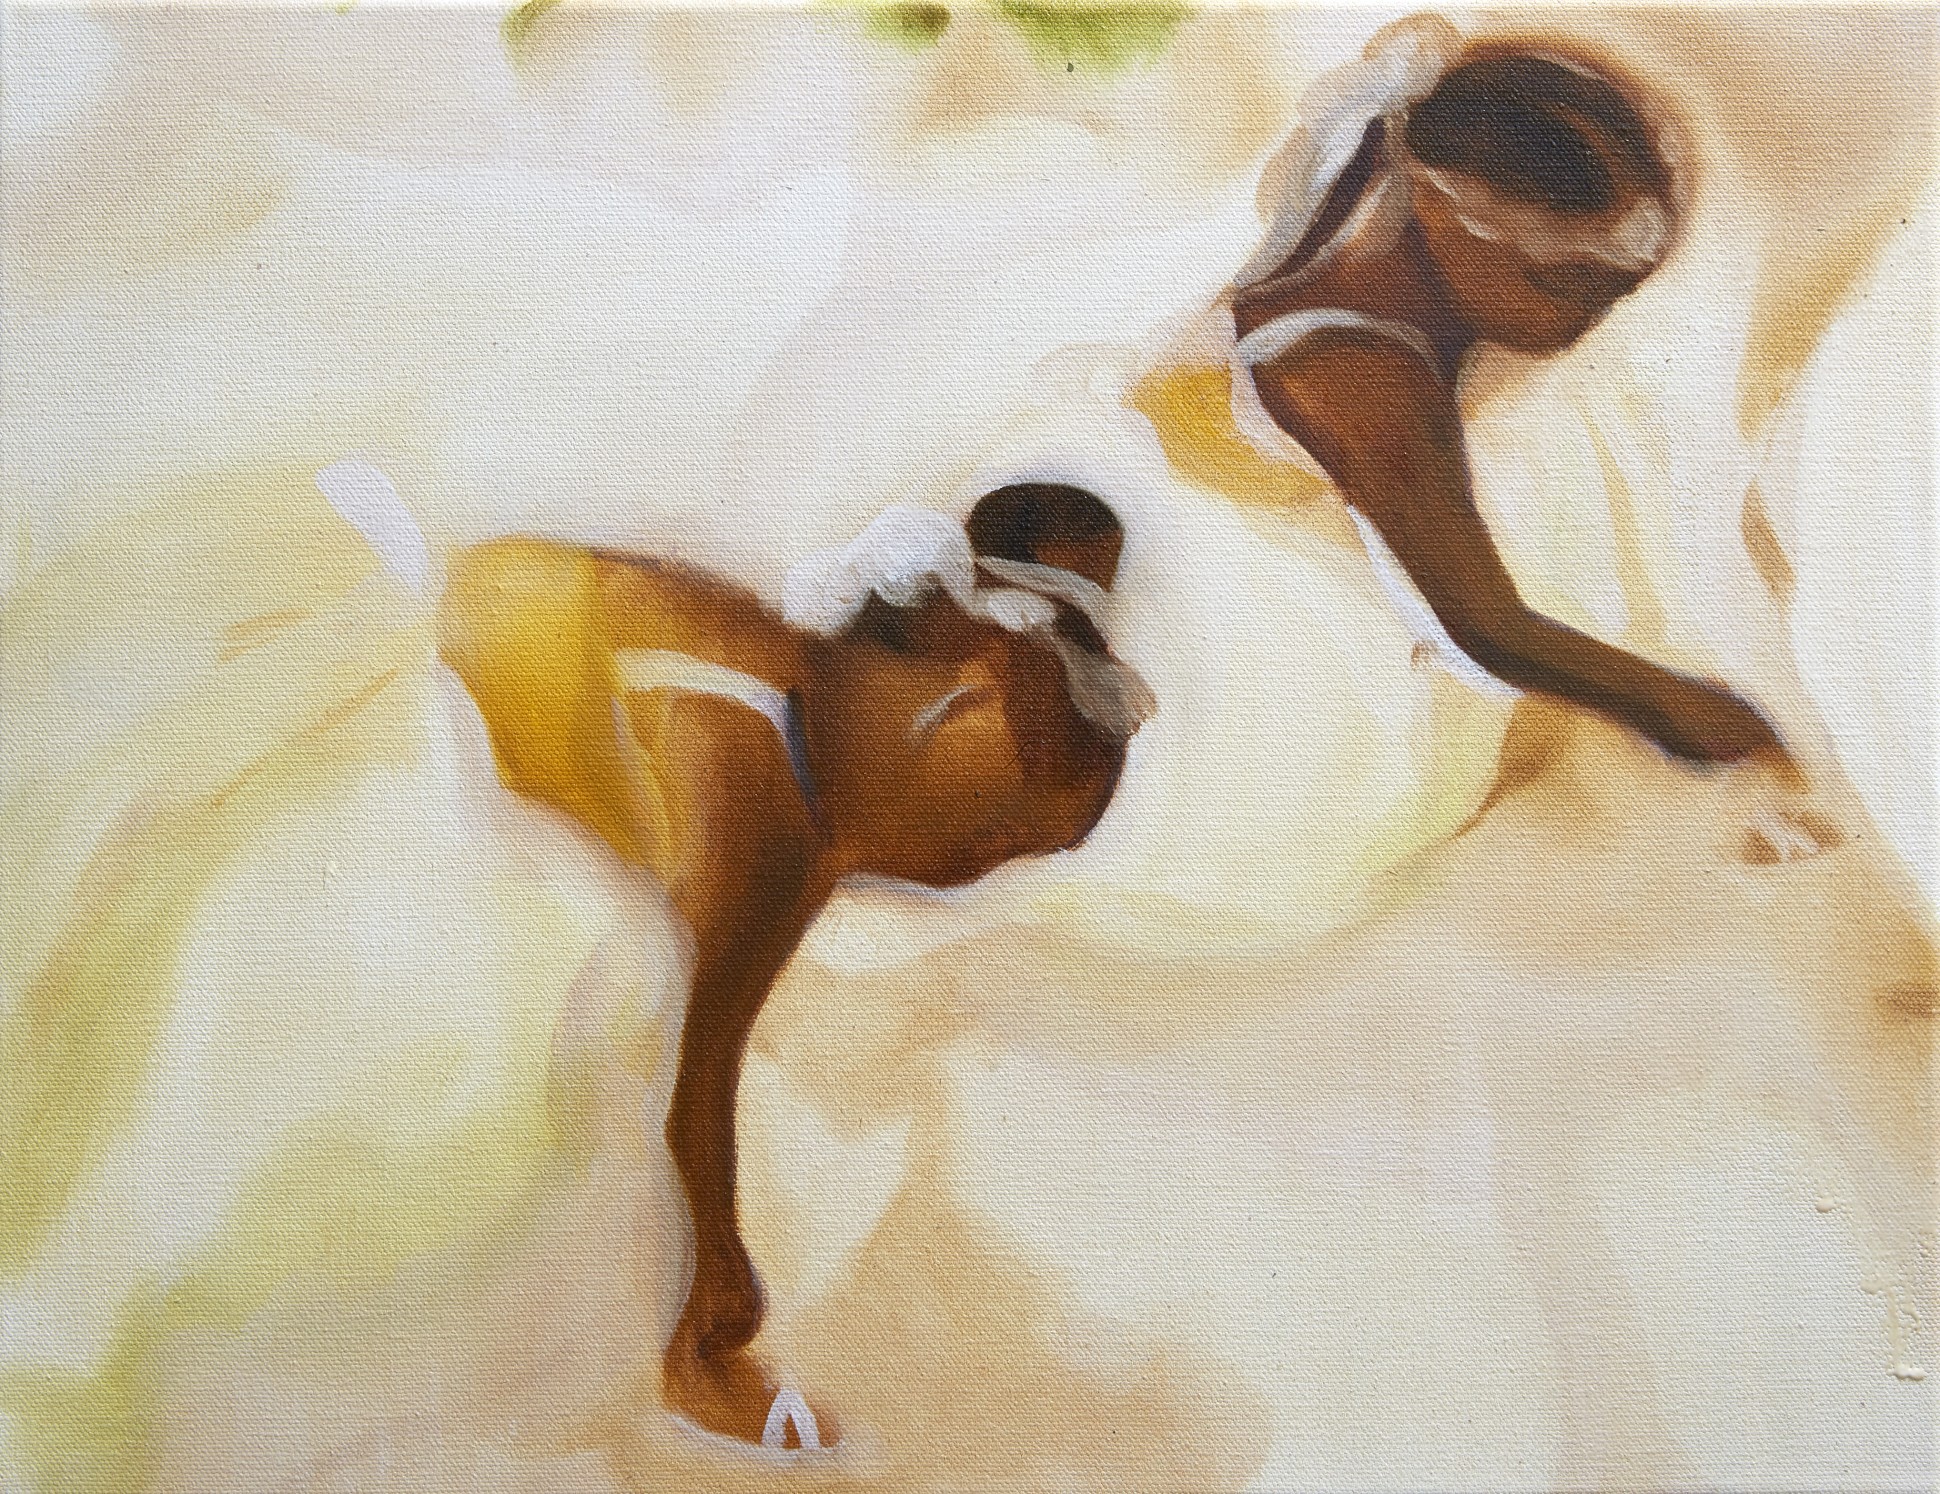 Flower Girls, 2021 Oil on canvas 36 x 46 cm. / 14 x 18 in.